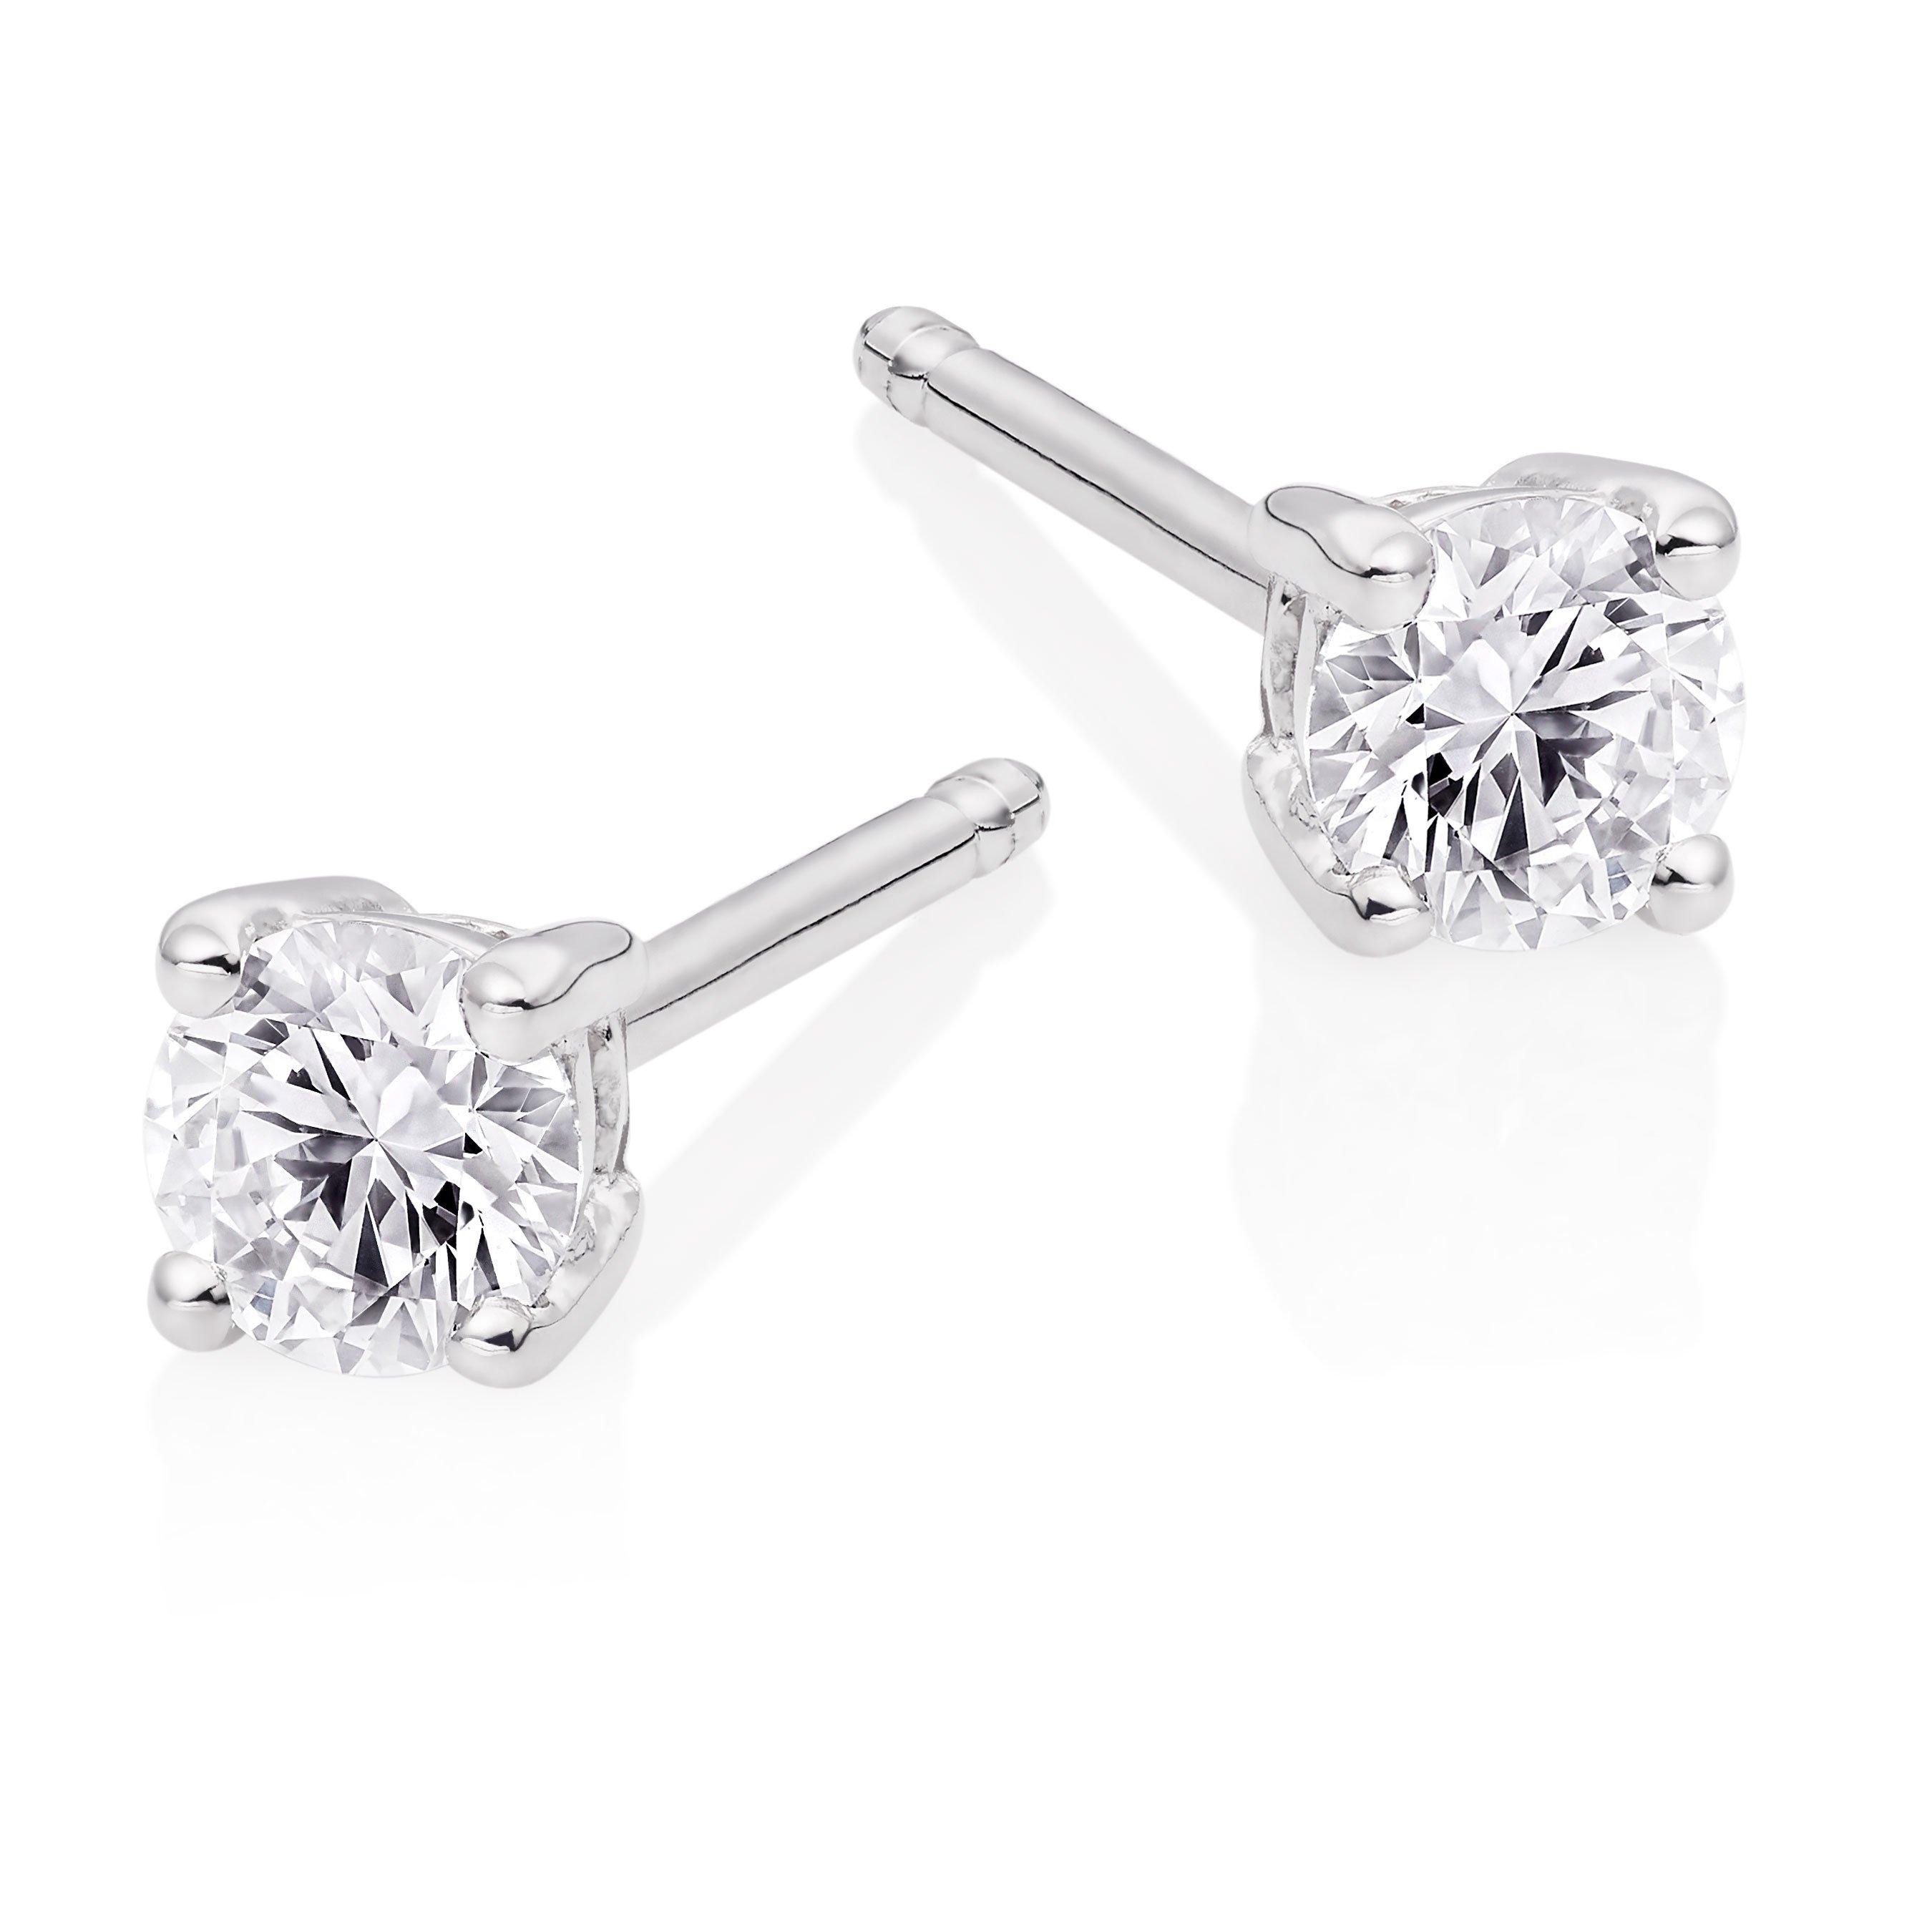 18ct White Gold Diamond Stud Earrings | 0119018 | Beaverbrooks the ...